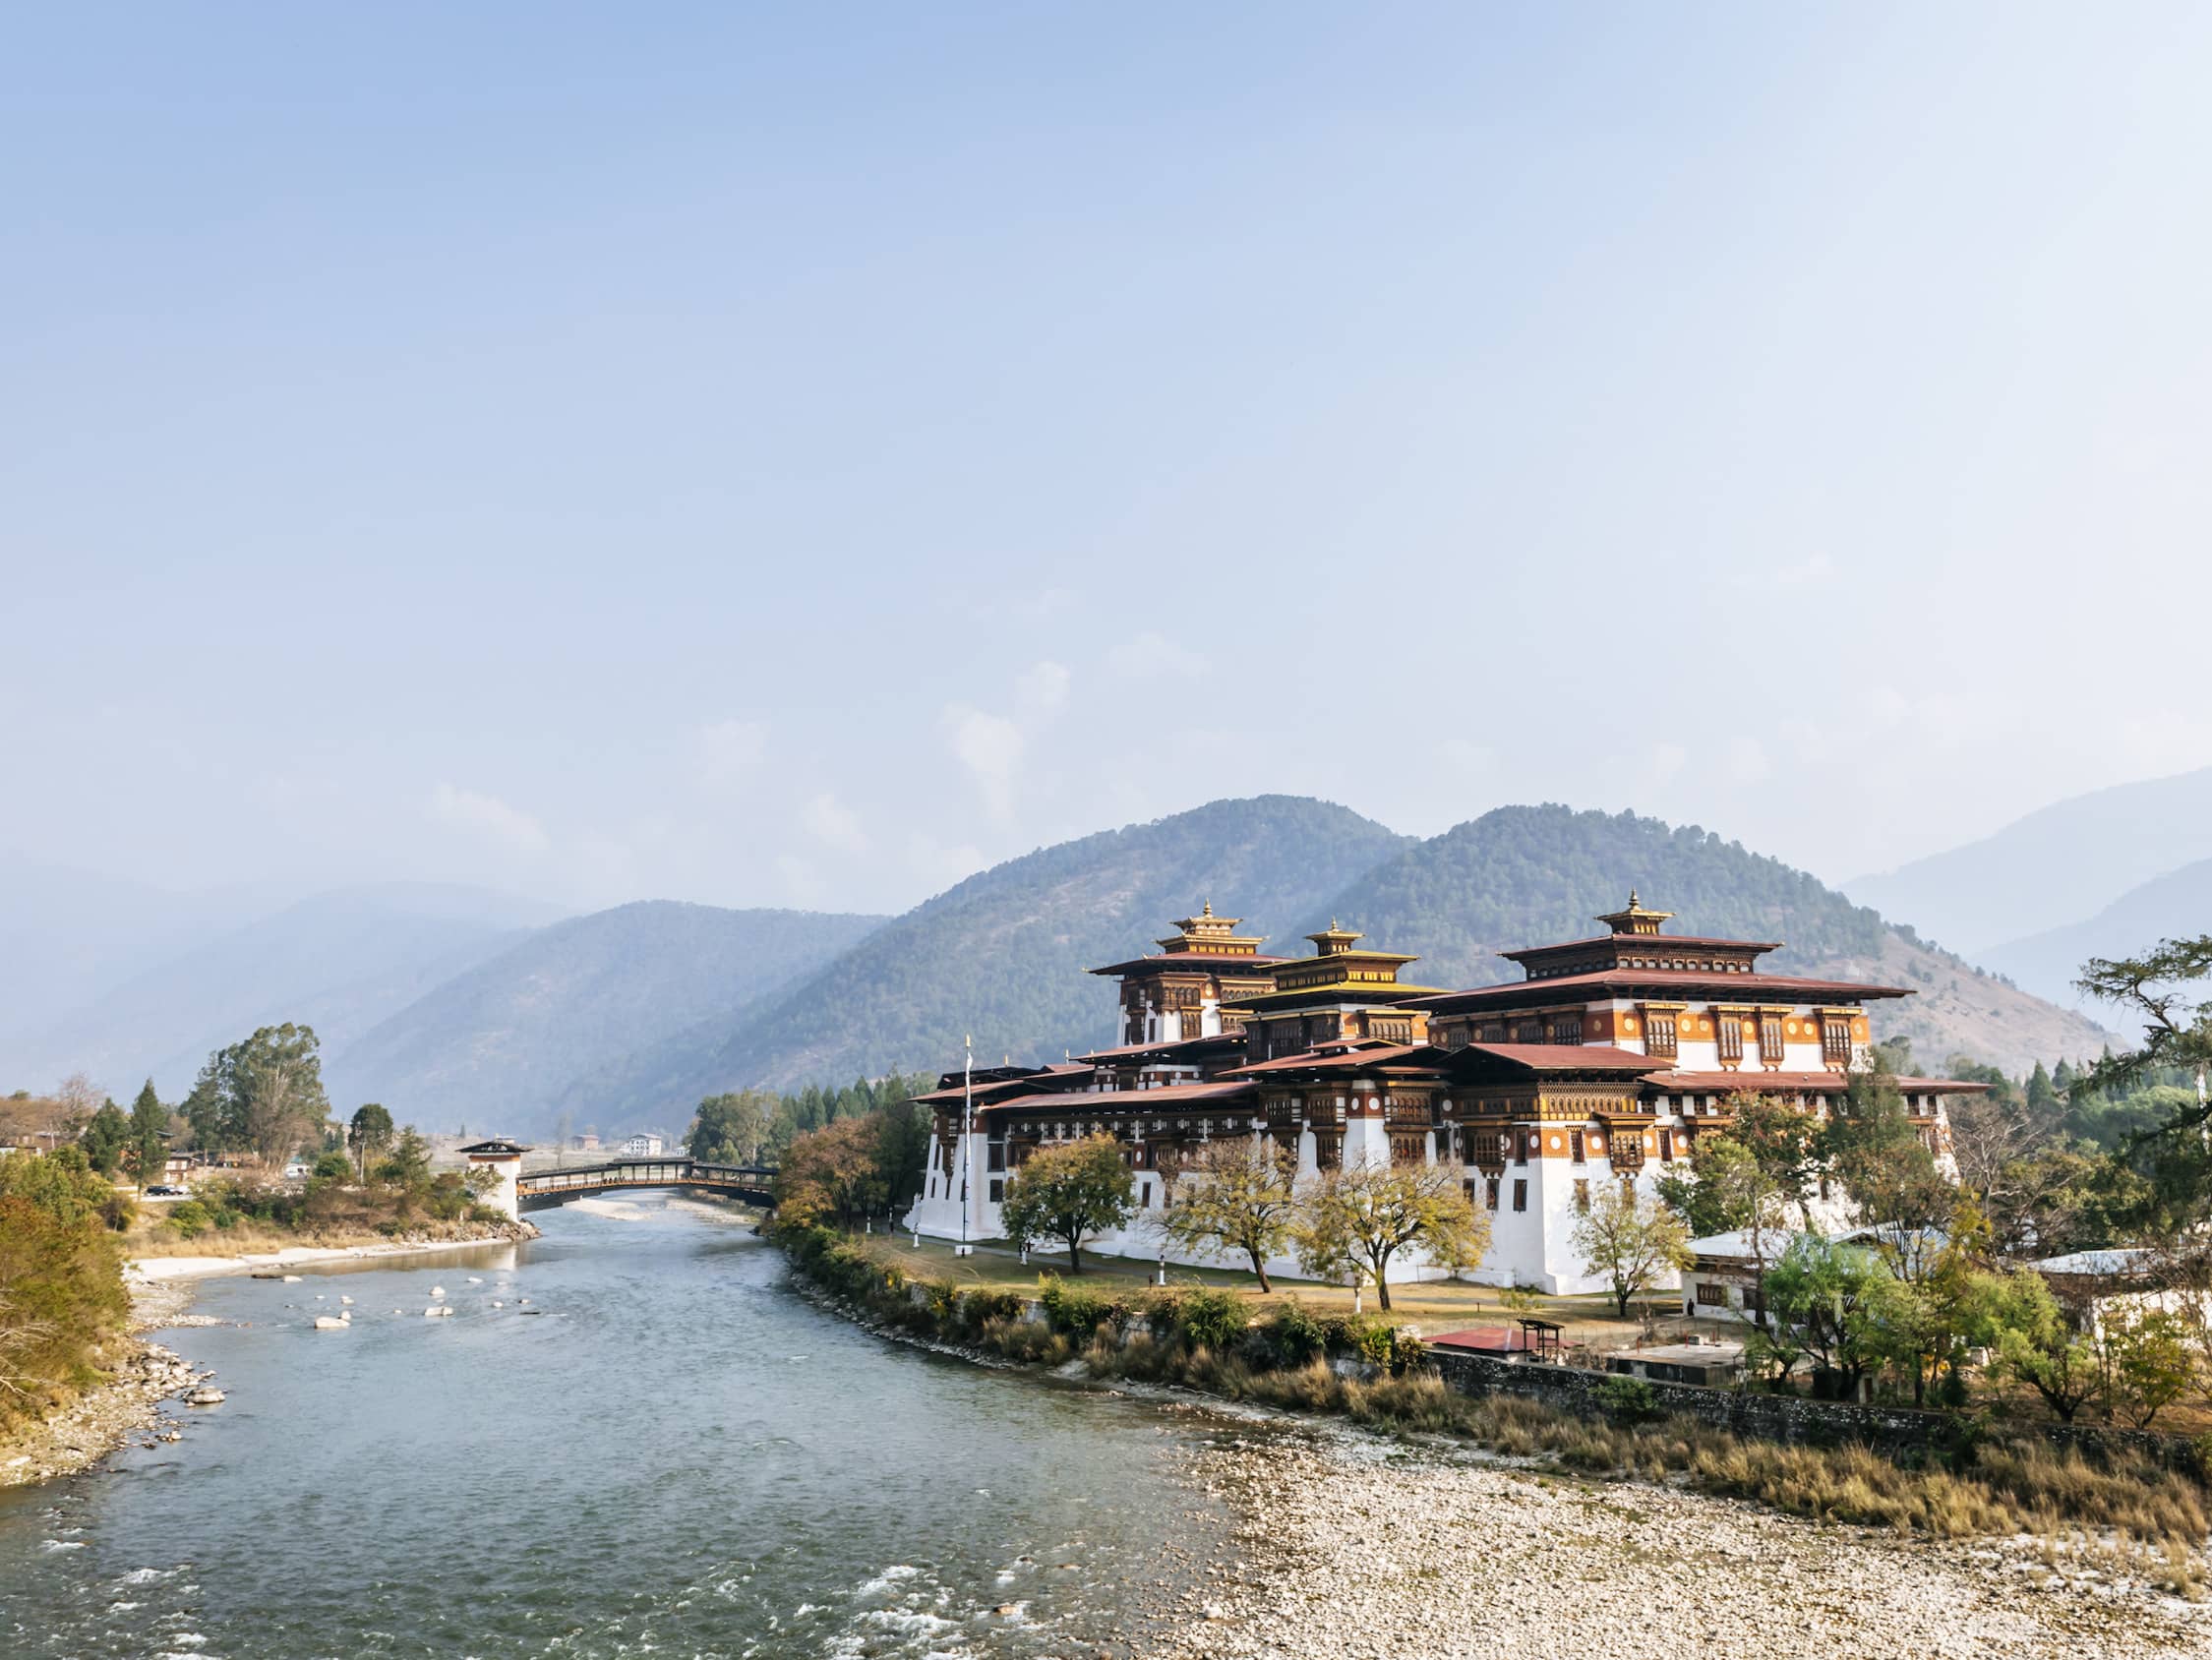  Explore the Paro Rinpung Dzong  